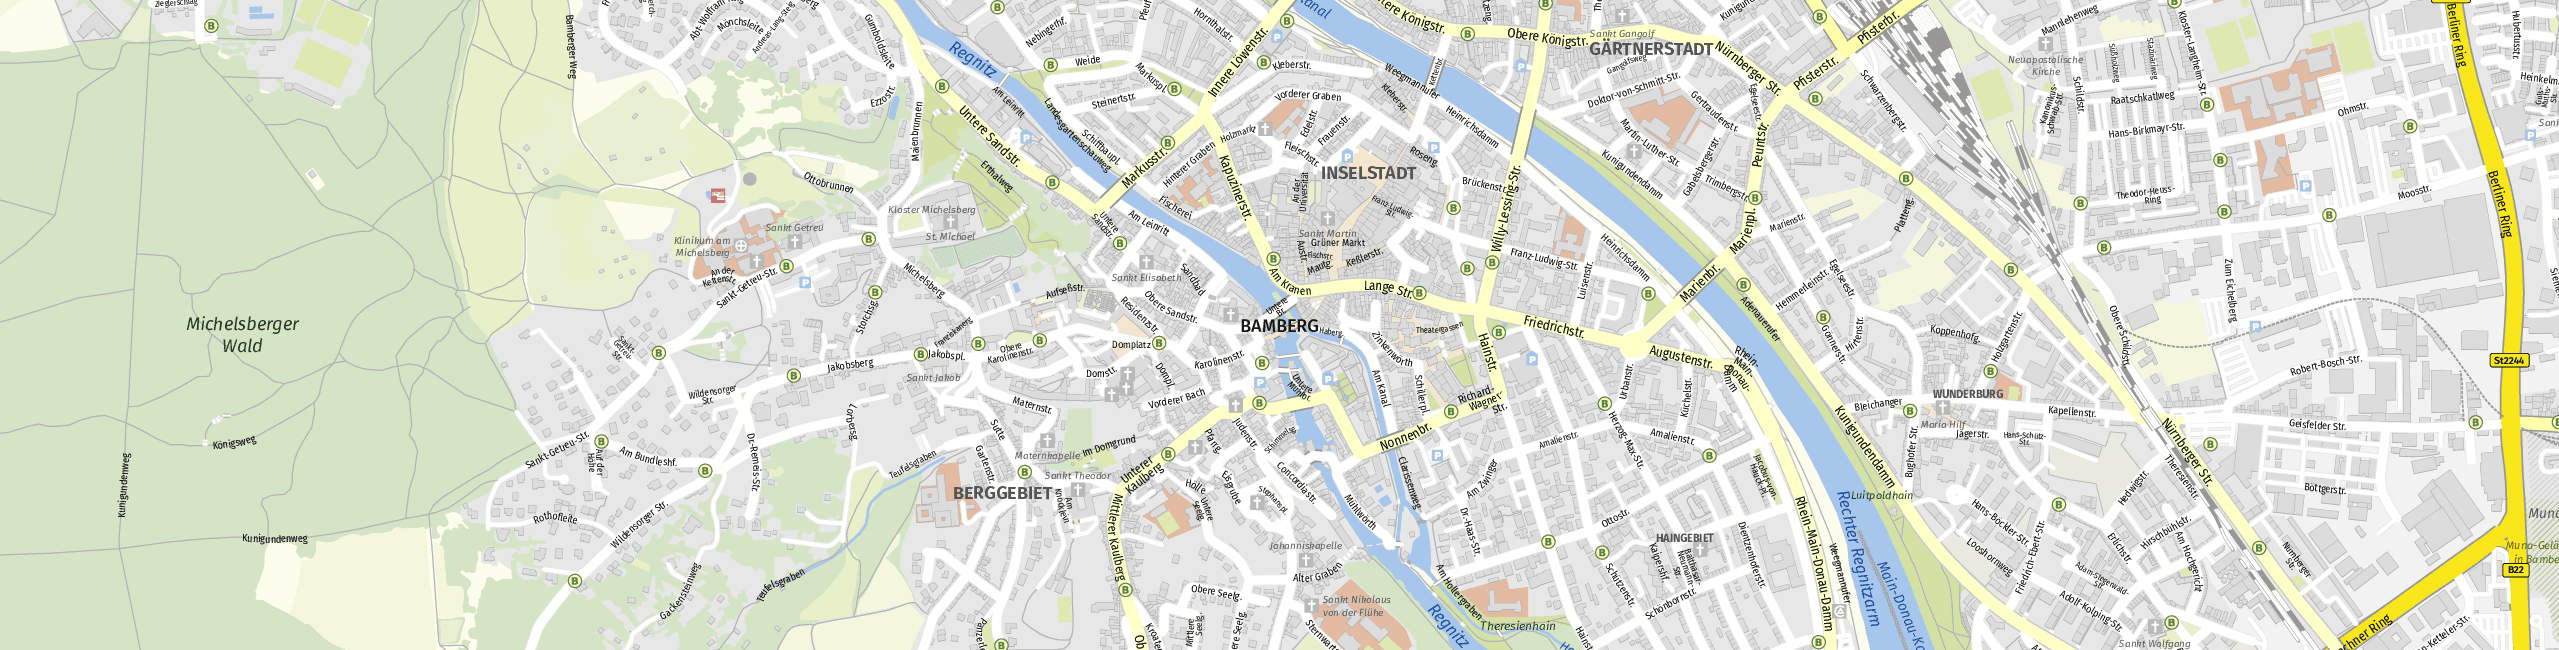 Stadtplan Bamberg zum Downloaden.